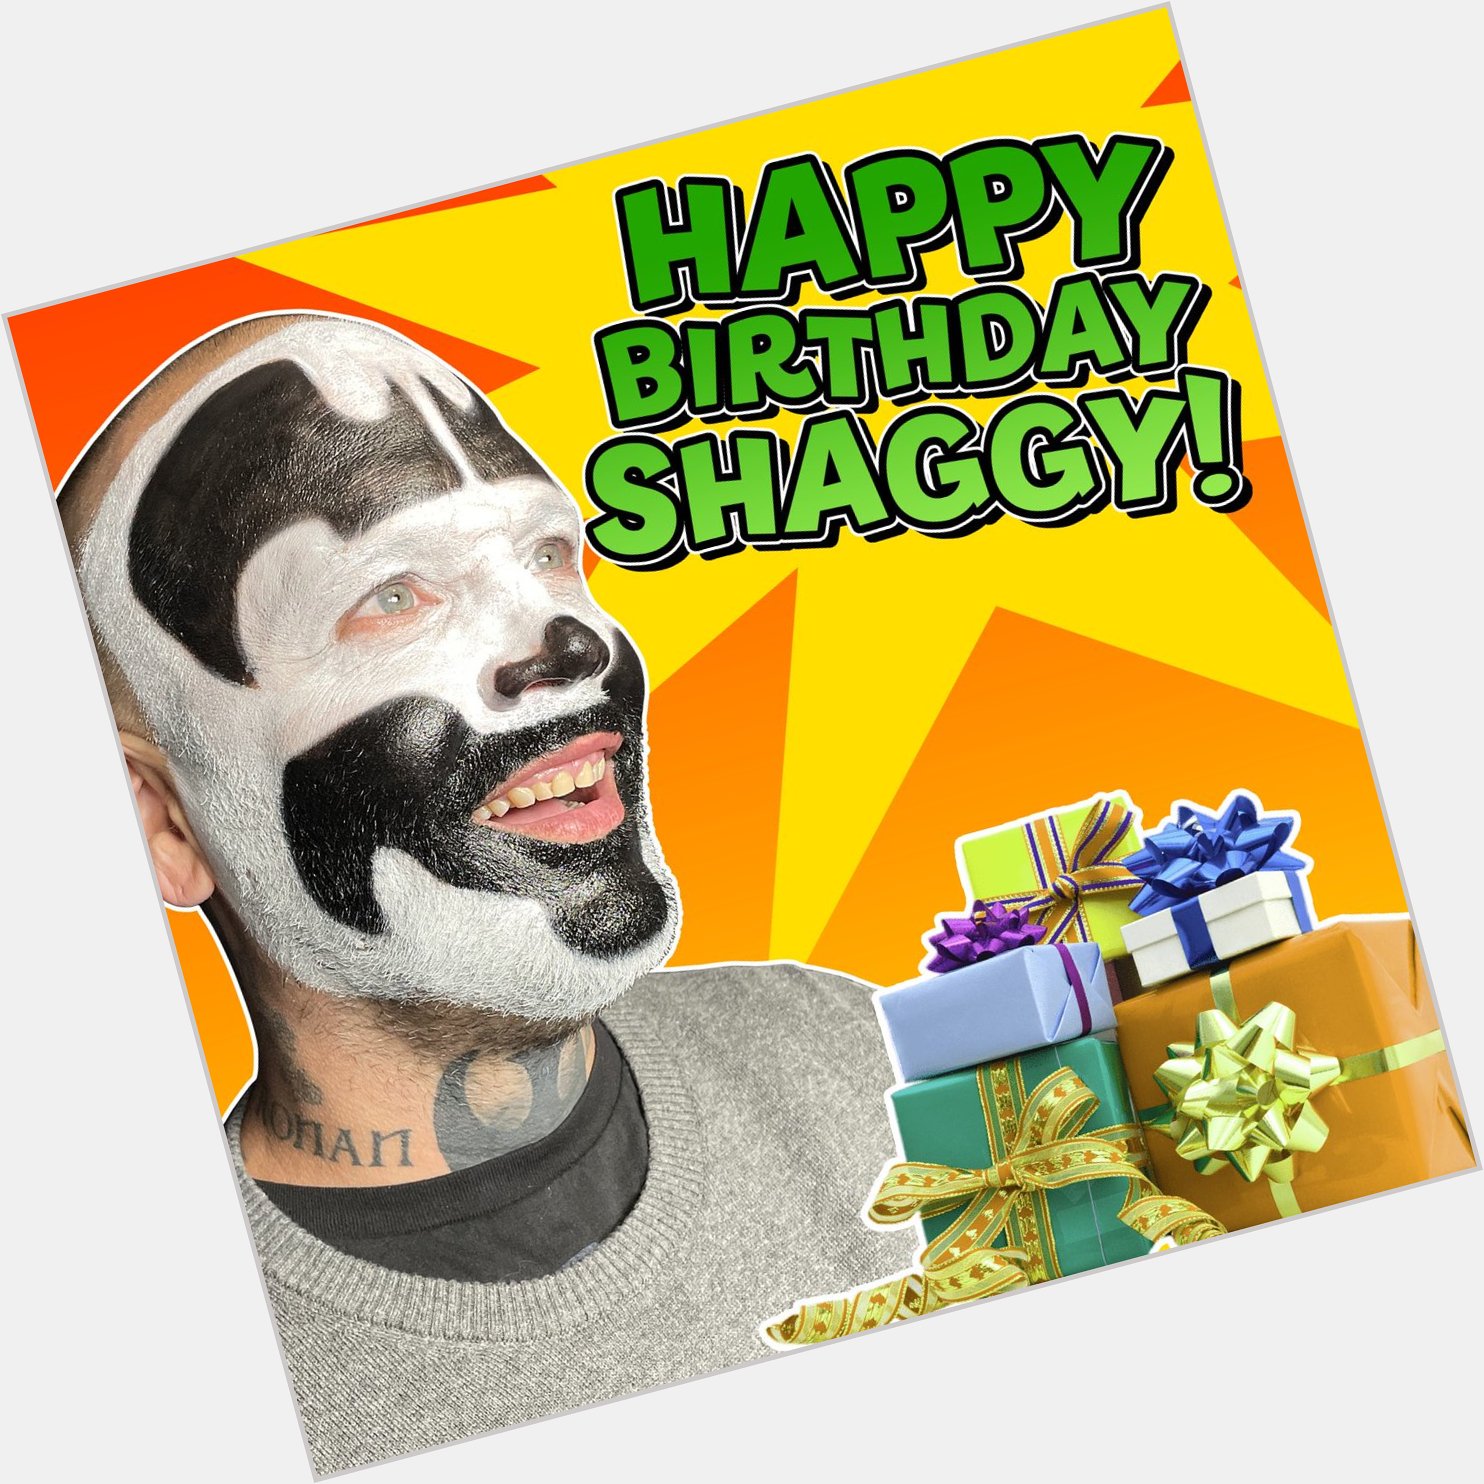 Happy Birthday Shaggy 2 Dope! 